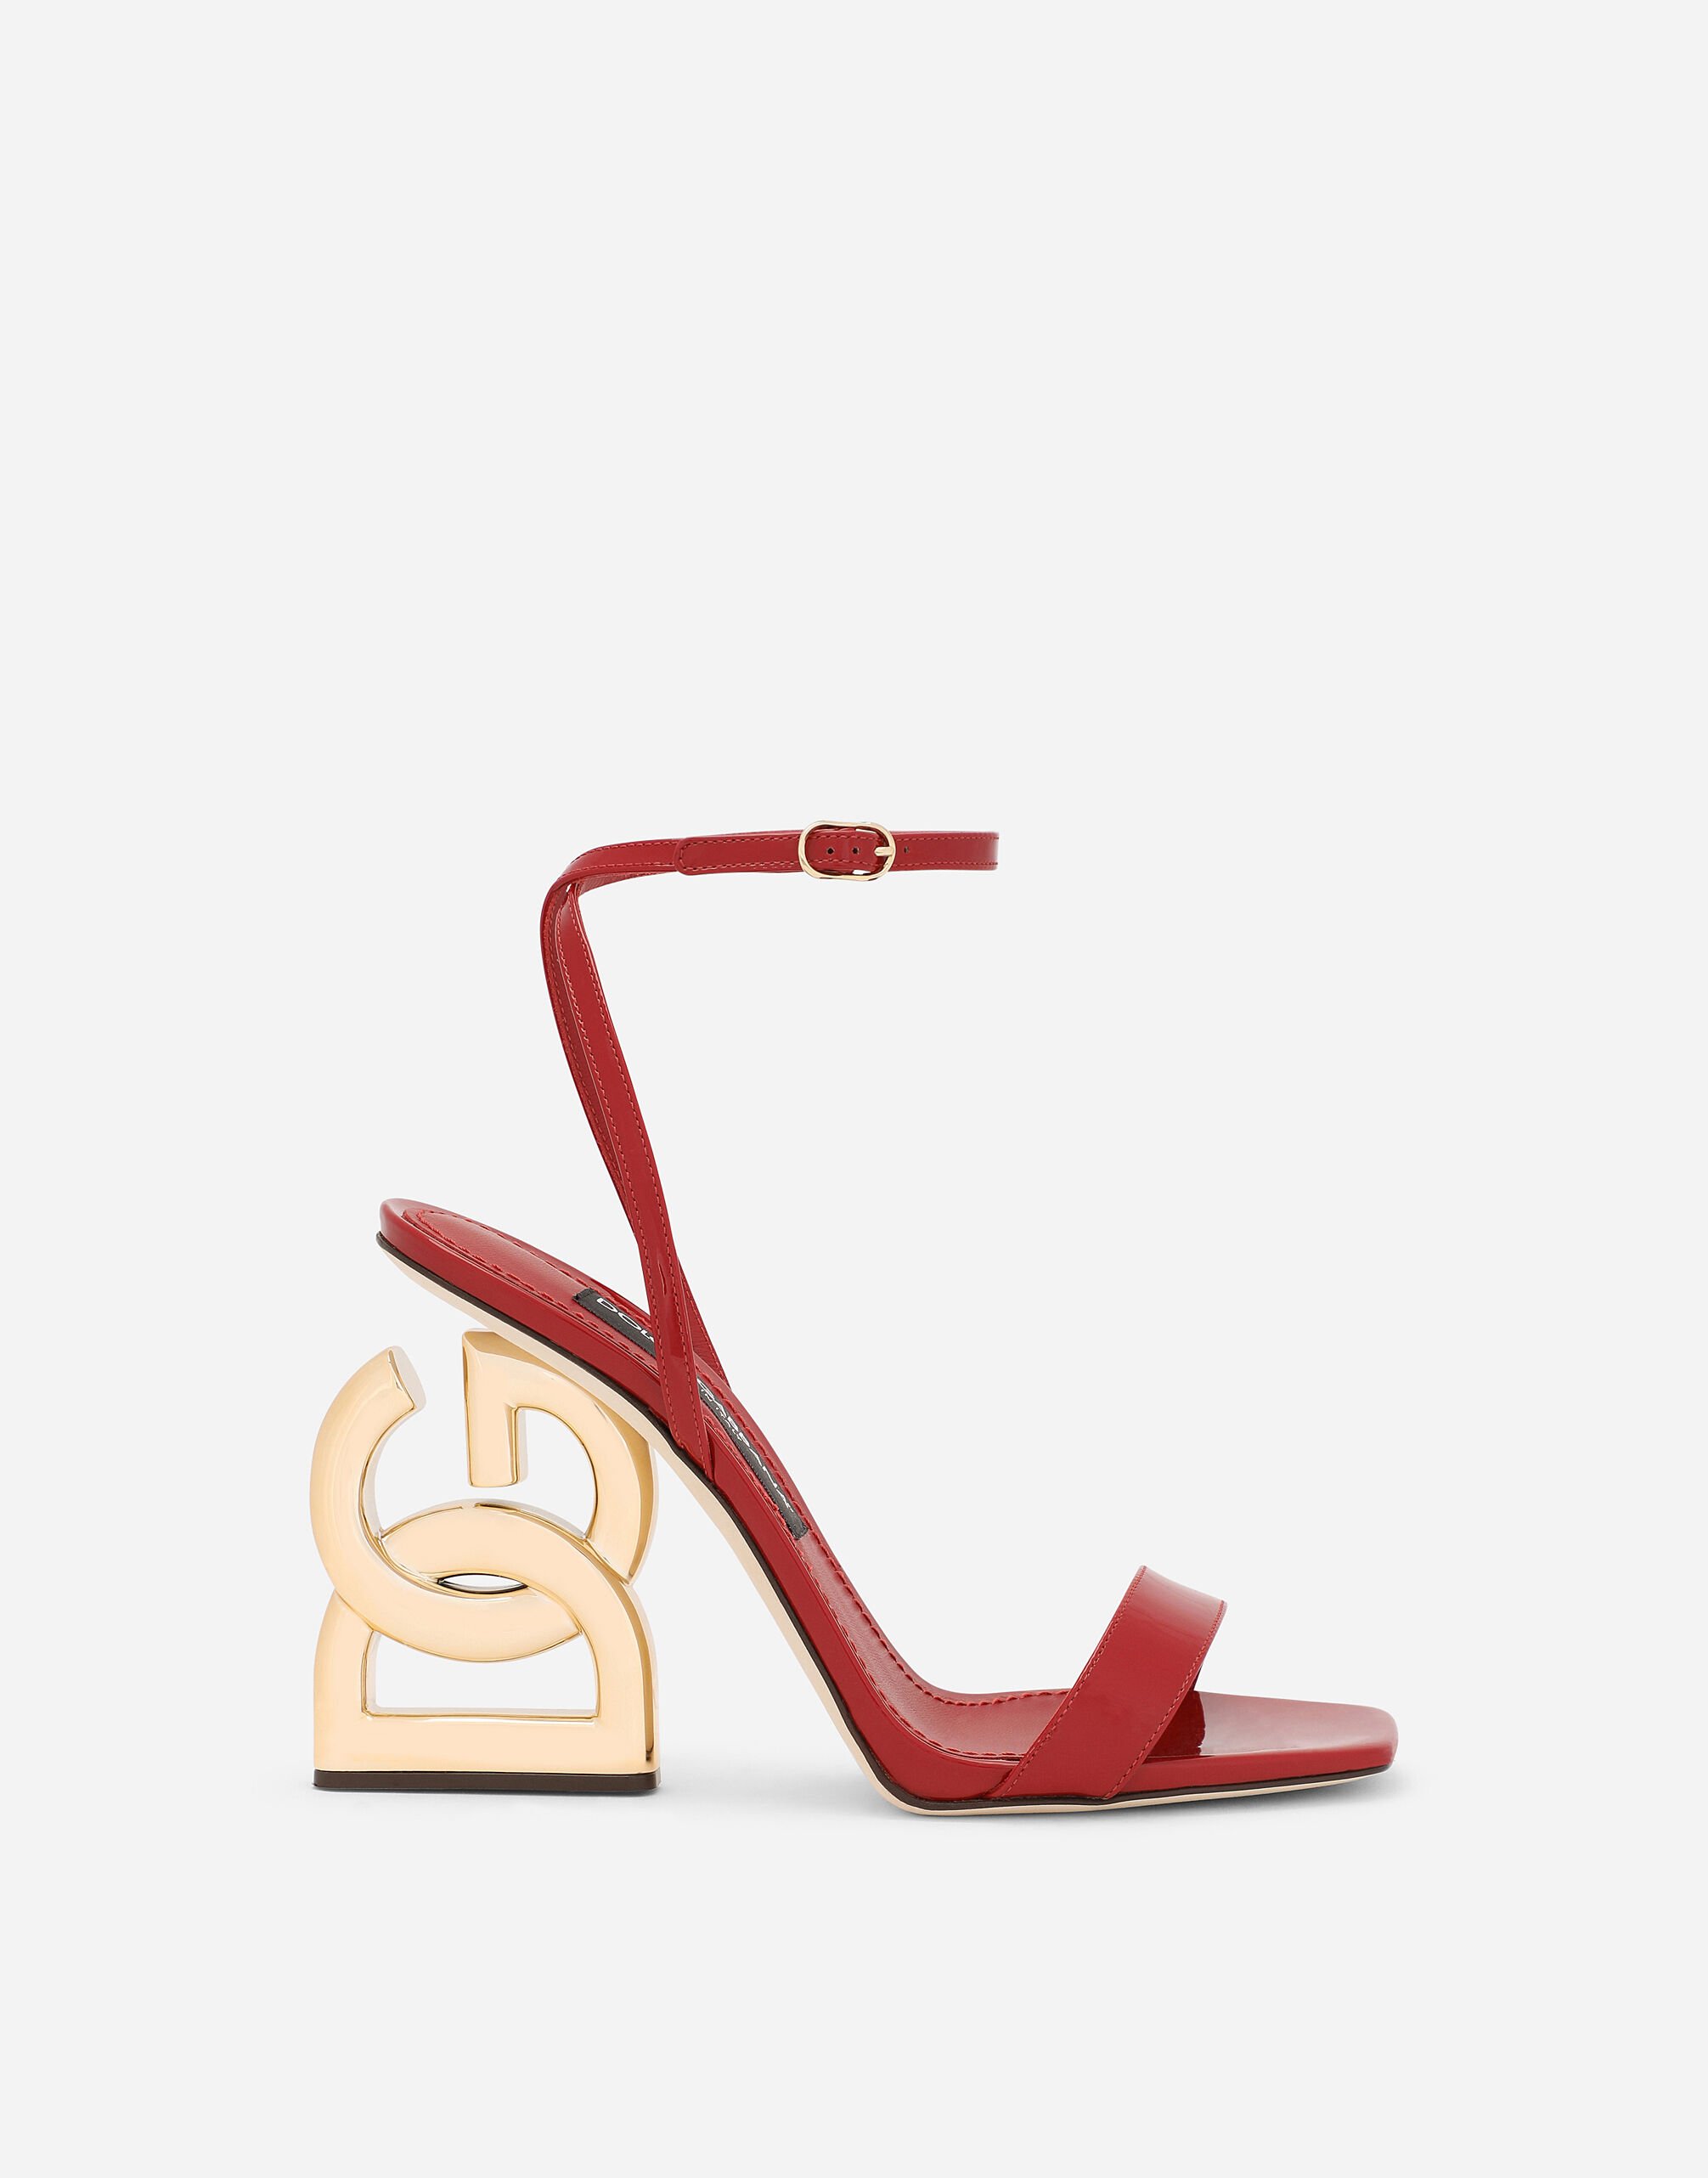 Dolce & Gabbana Patent leather sandals with 3.5 heel Print CR1751AV885